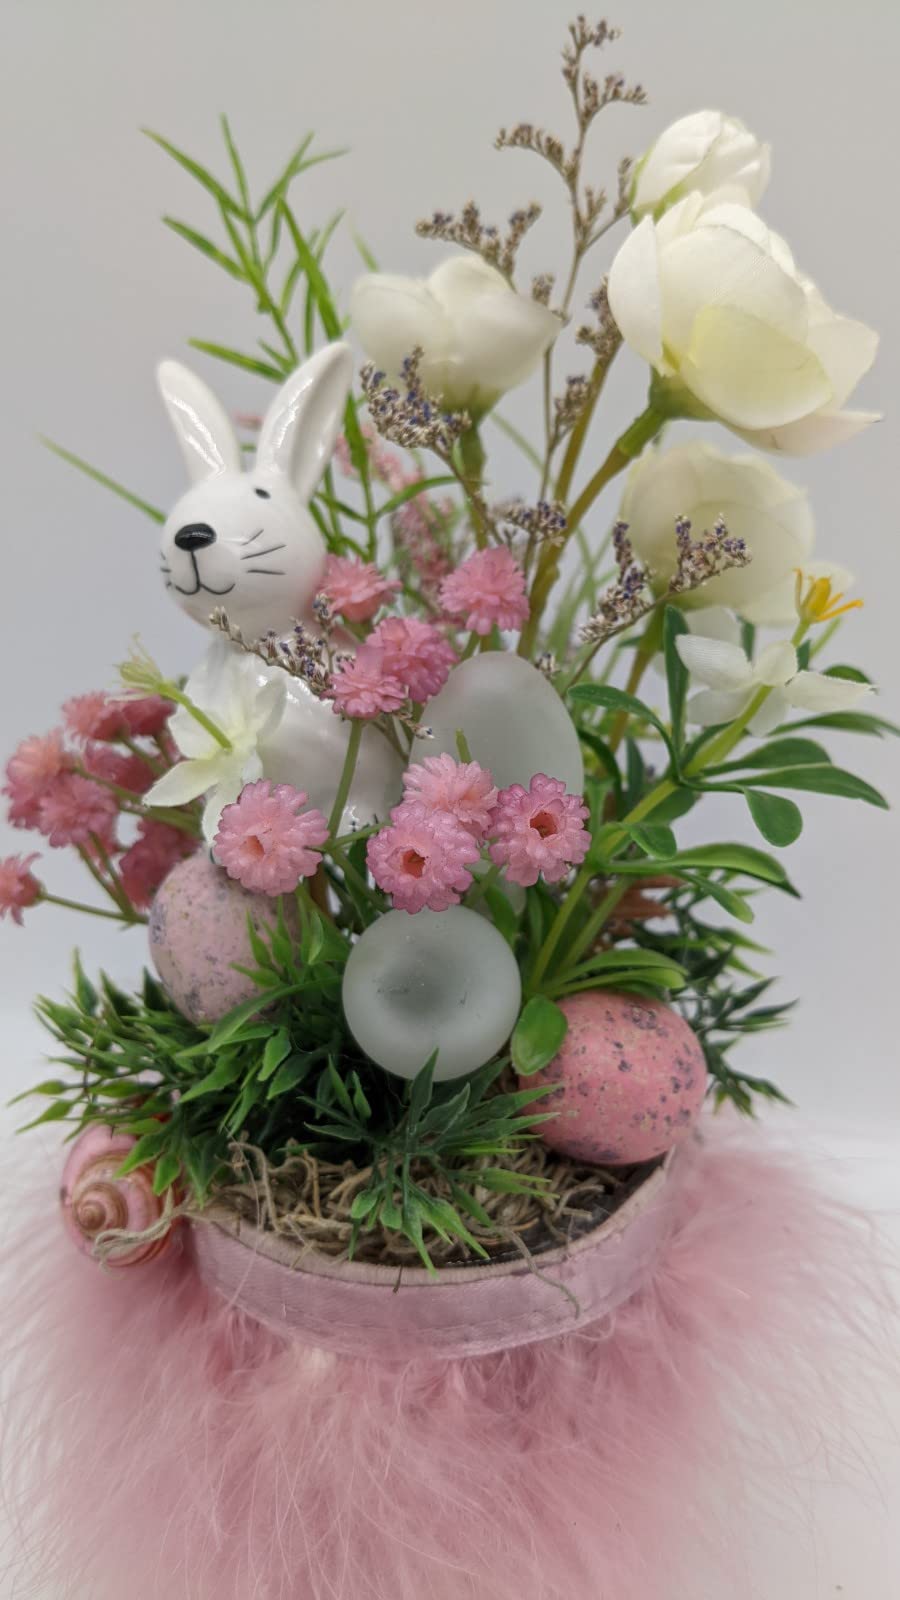 Ostergesteck Frühlingsgesteck Blumenarrangement Hase Ranunkeln Eier rosa weiß